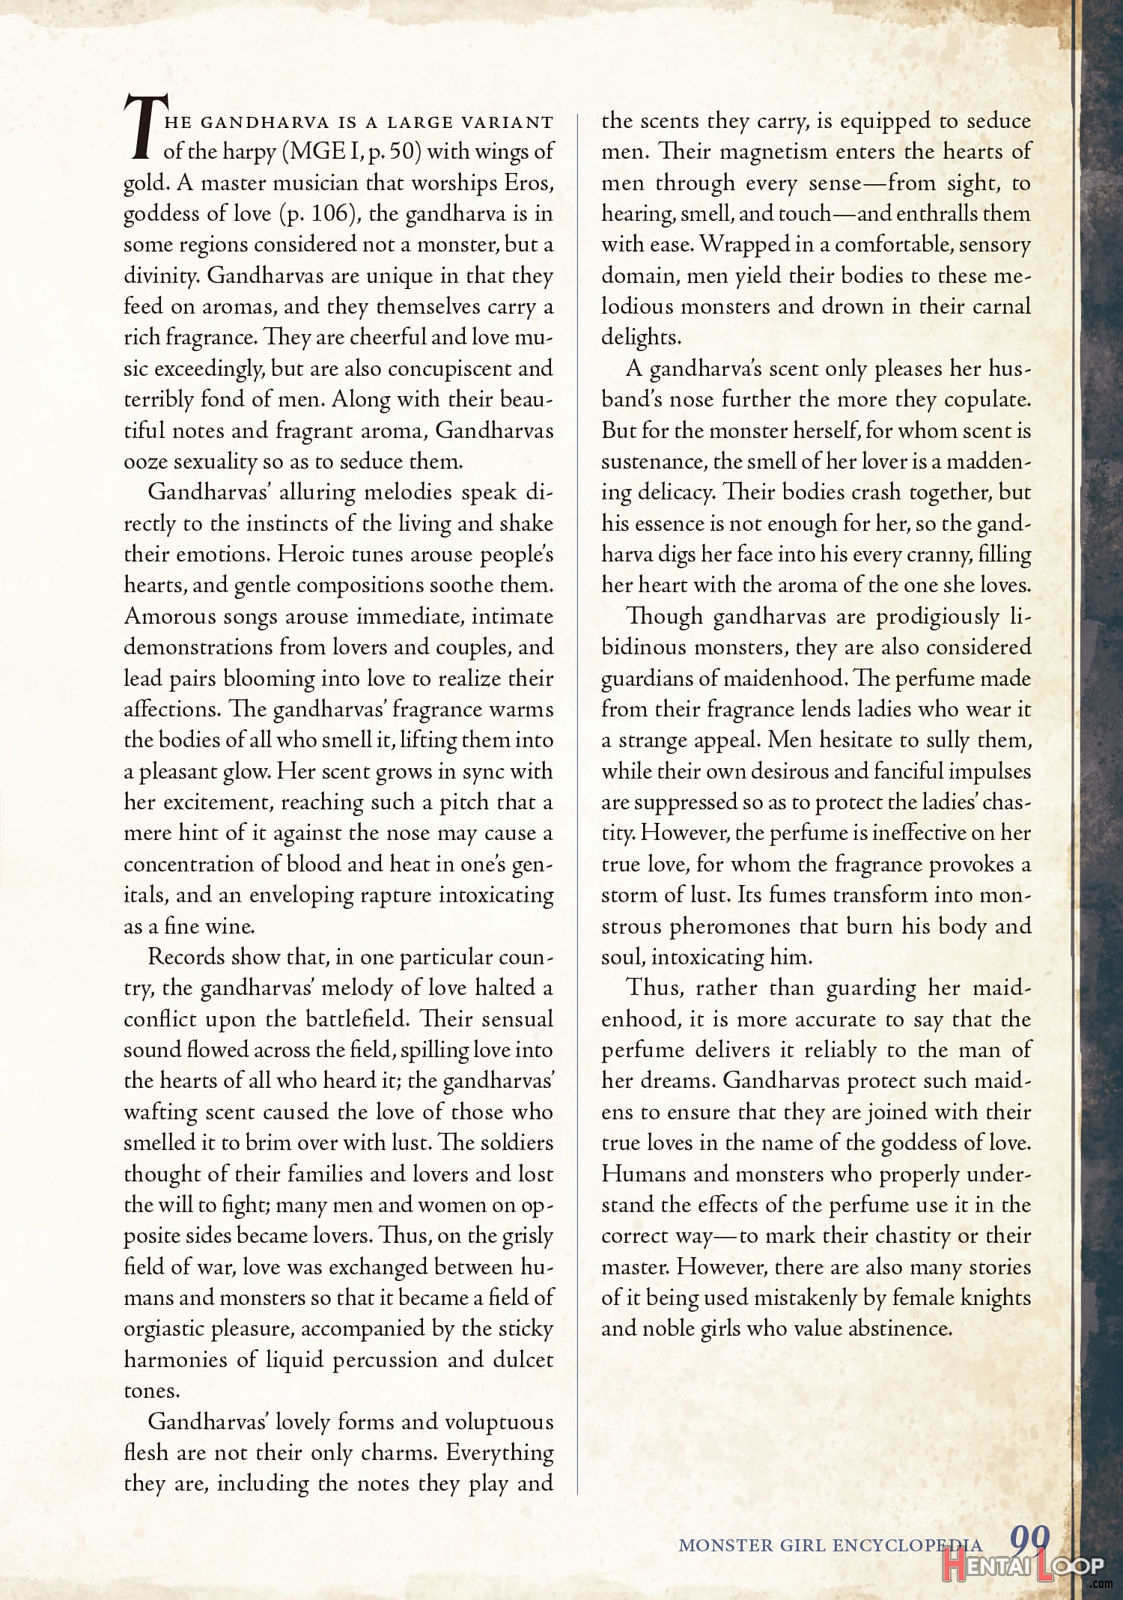 Monster Girl Encyclopedia Vol. 2 page 100